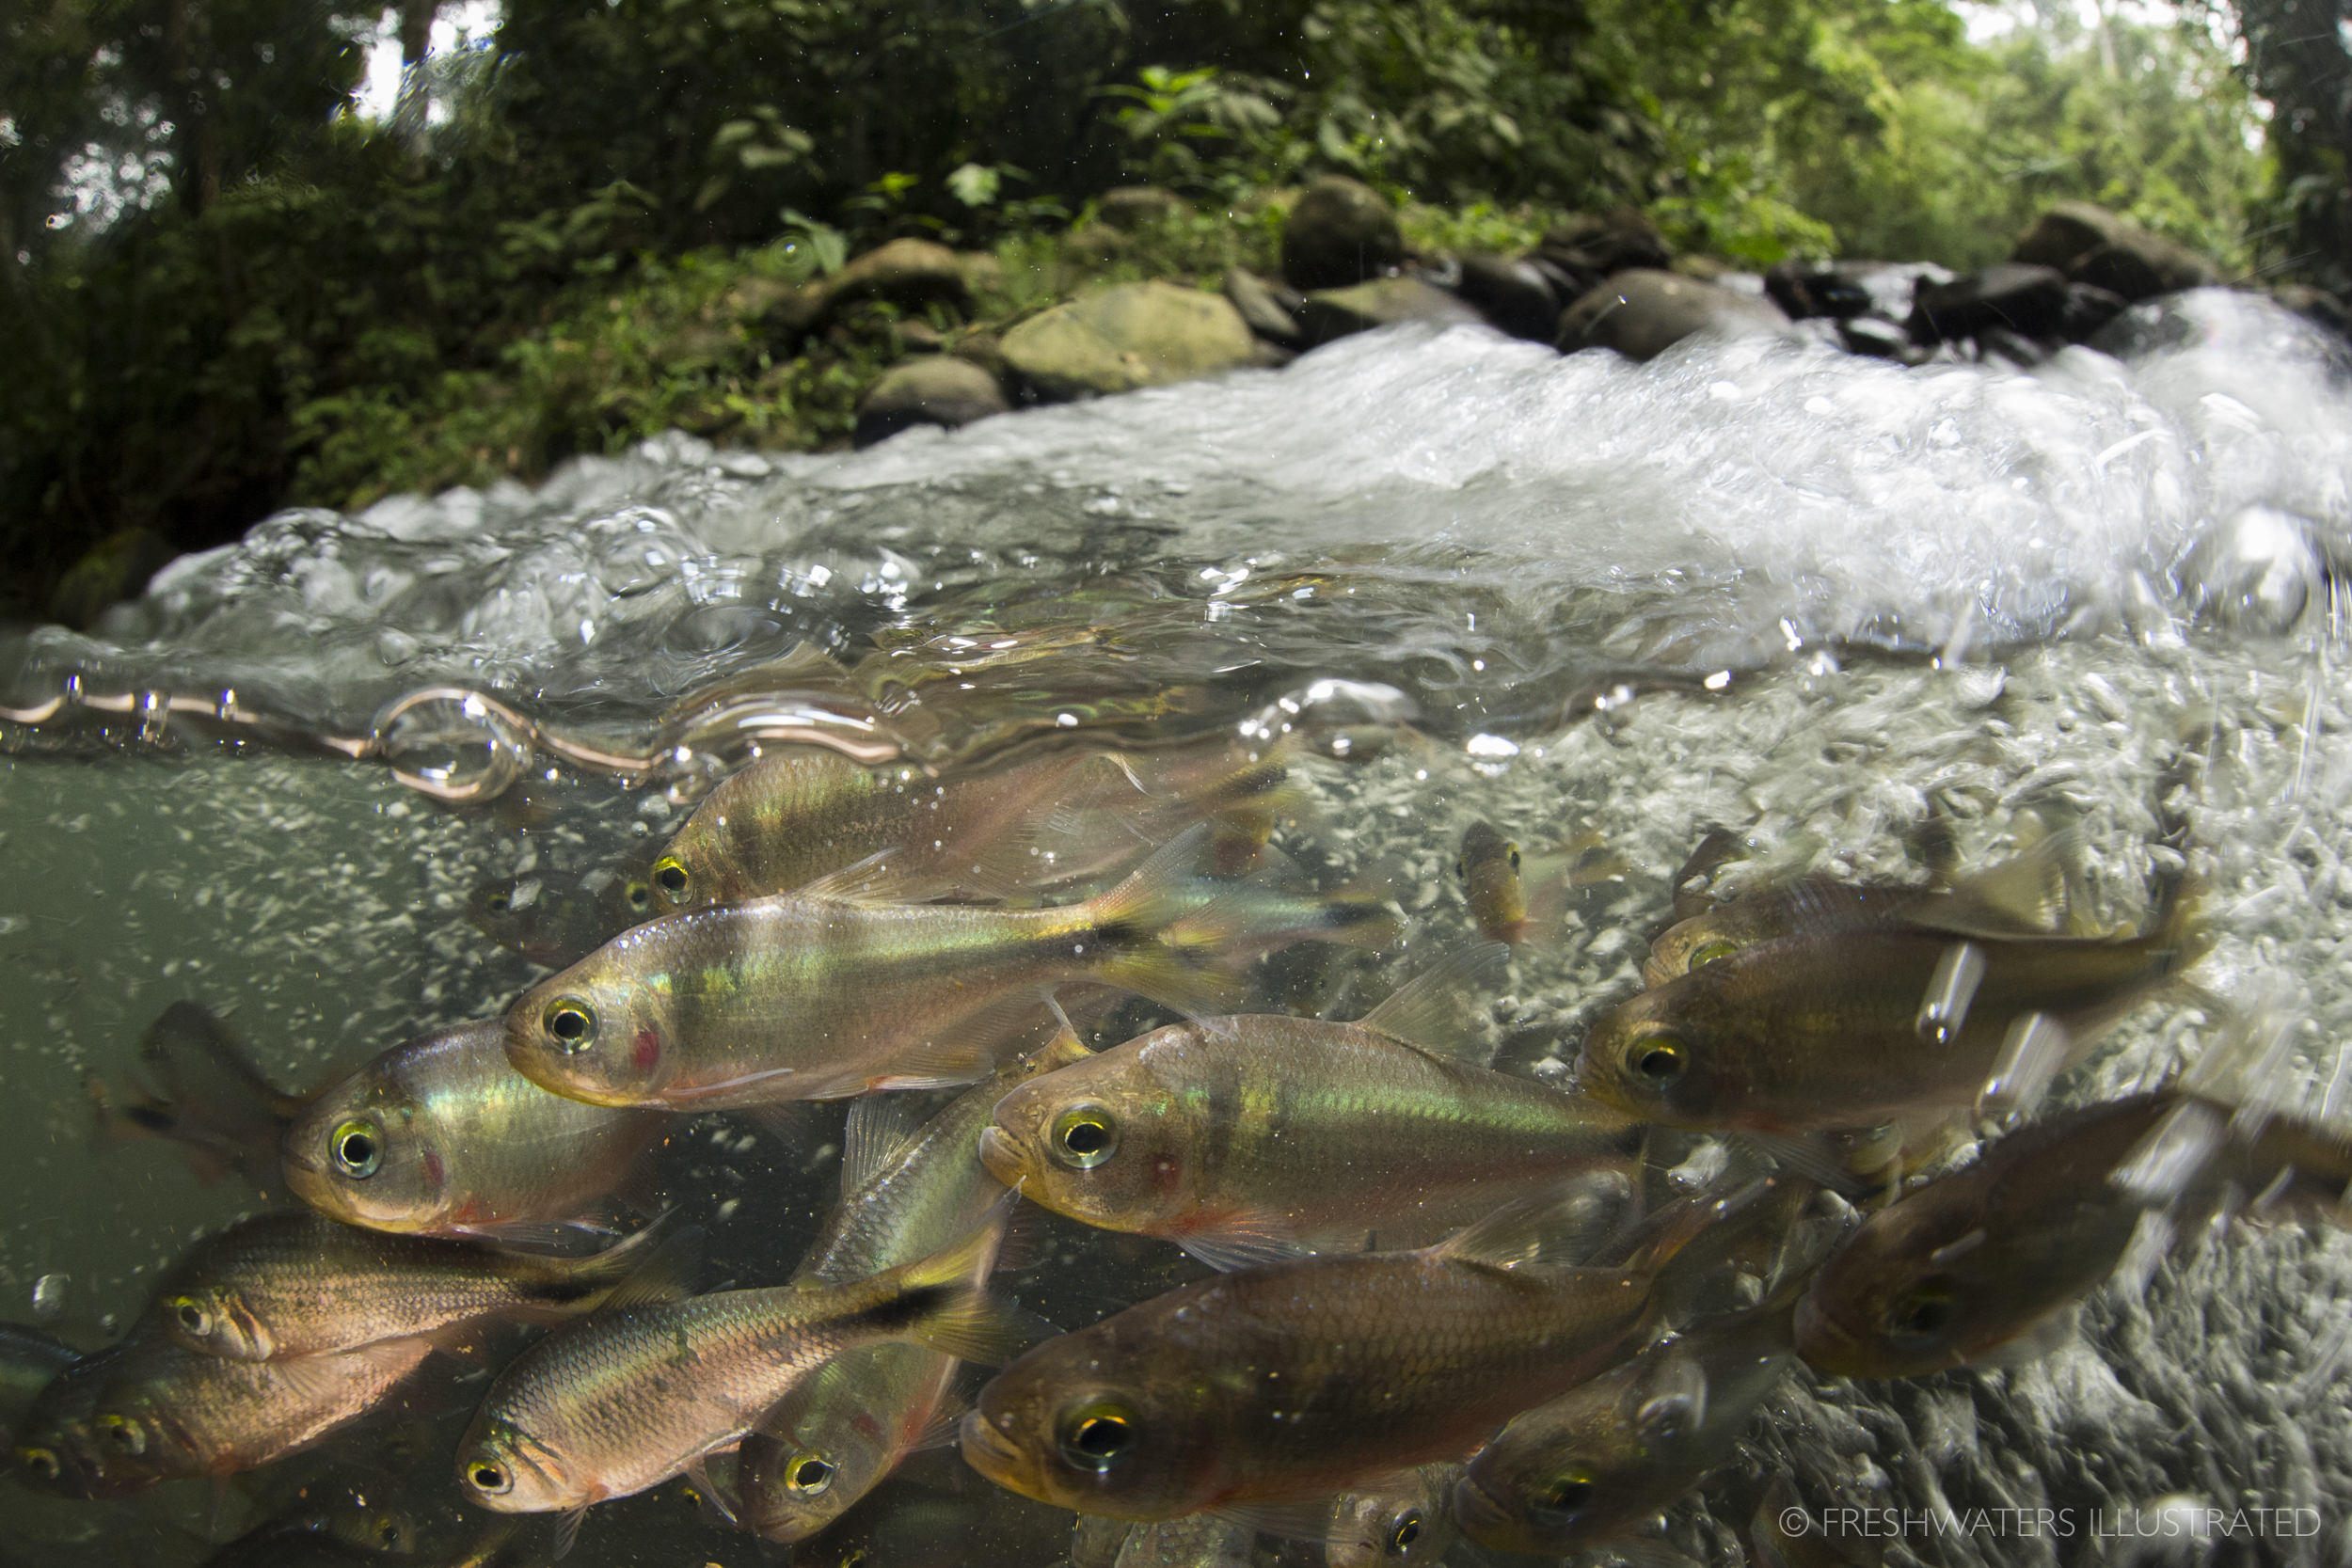  Rio Carbon, Costa Rica Schooling Creek Tetra (Bryconamericus scleroparius) 